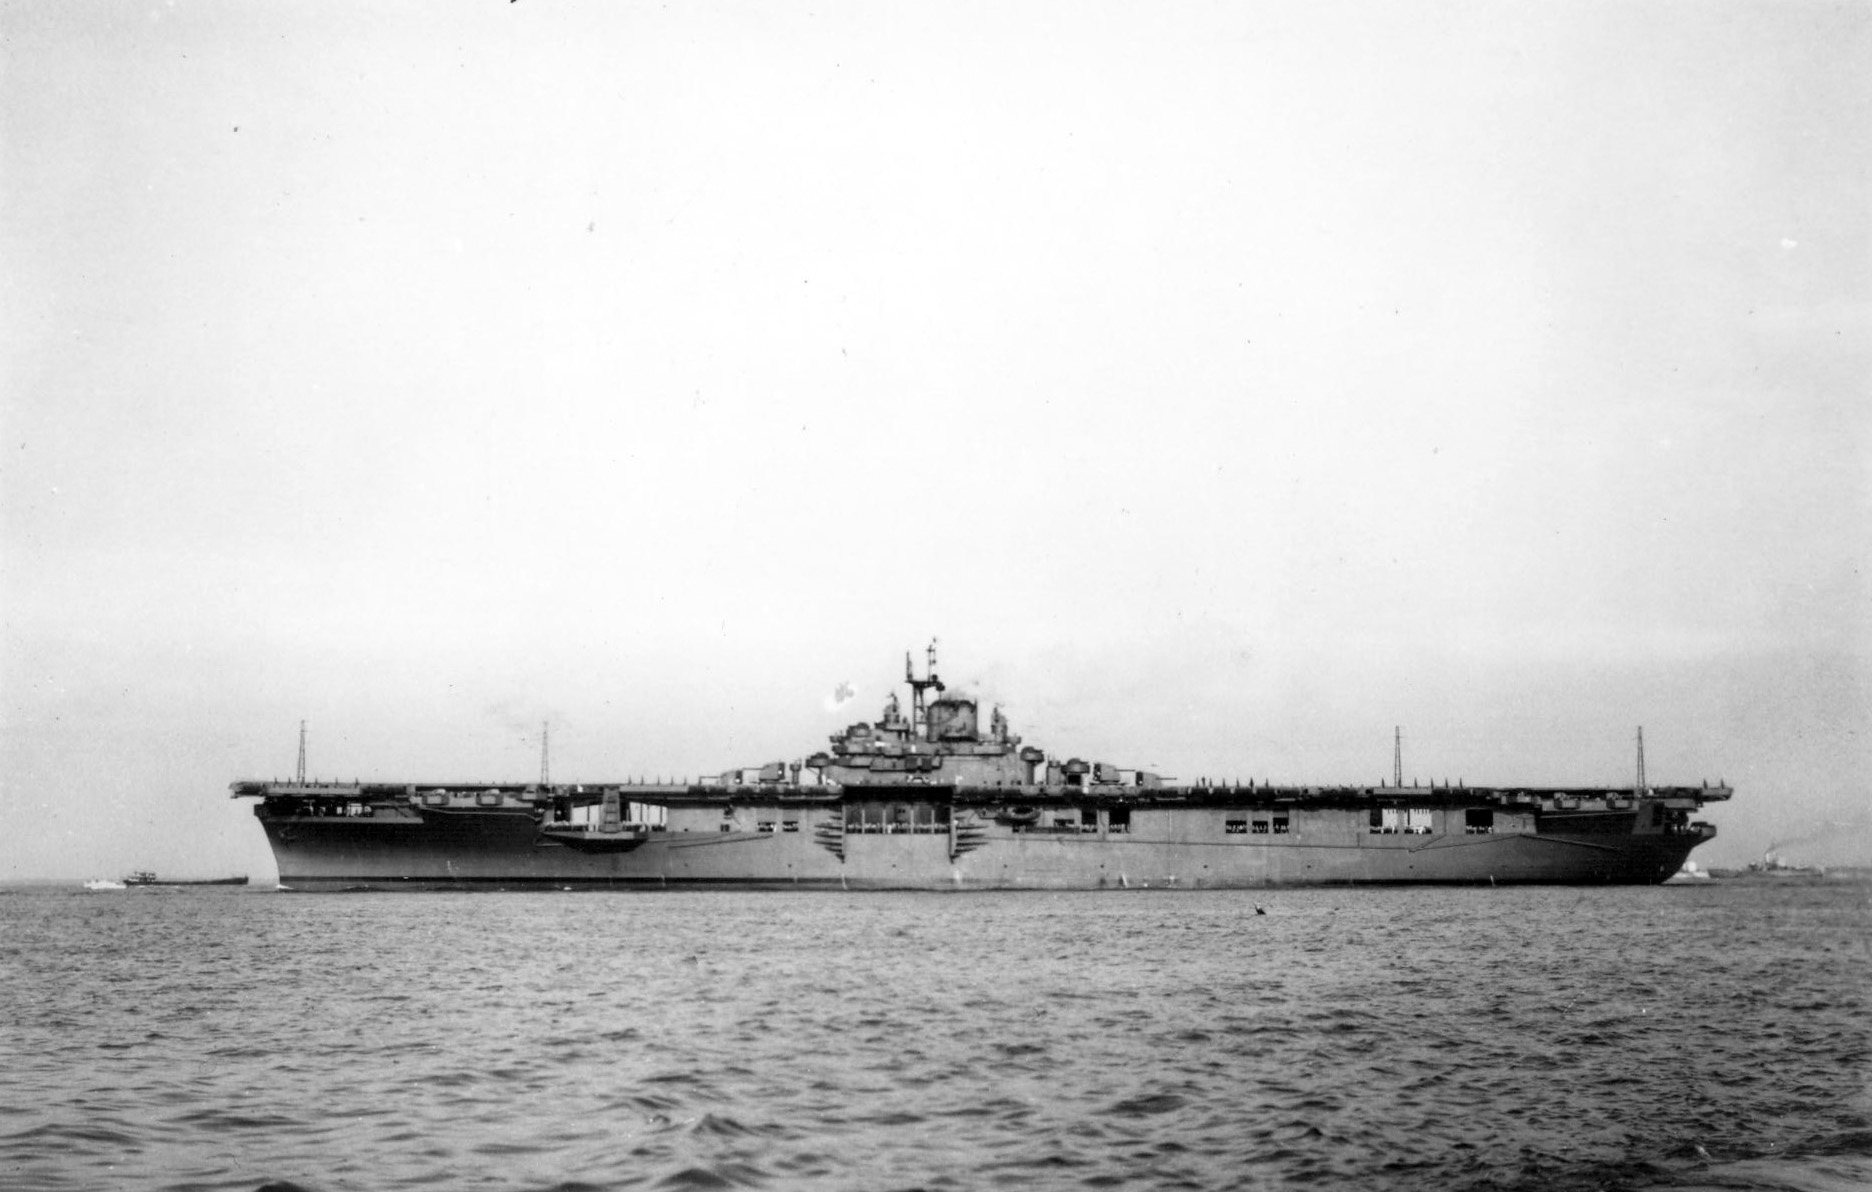 Intrepid off Newport News, Virginia, United States, 16 Aug 1943